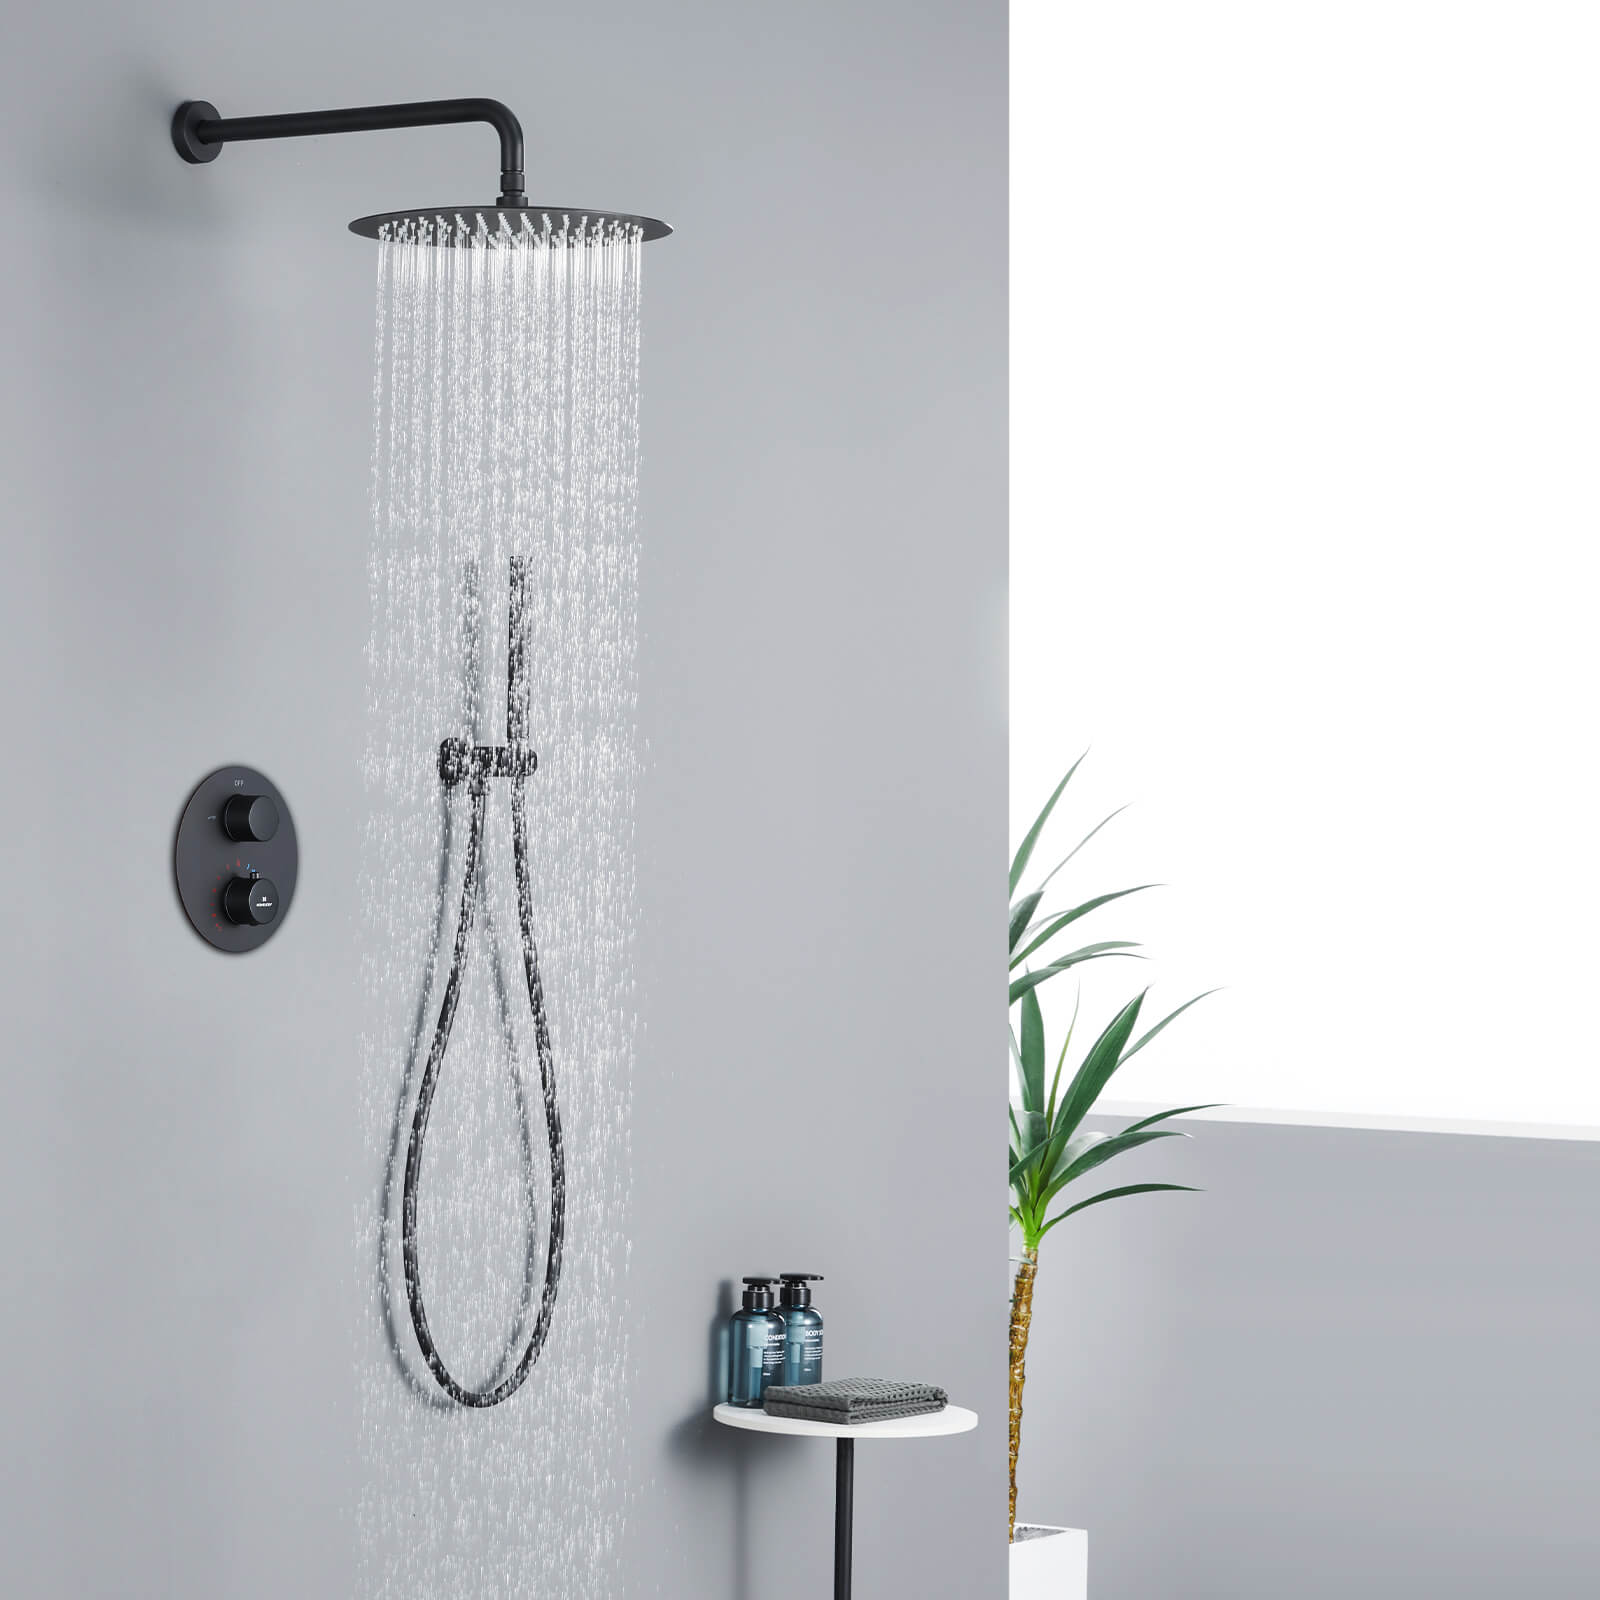 Homelody Matte Black Round Concealed Shower System